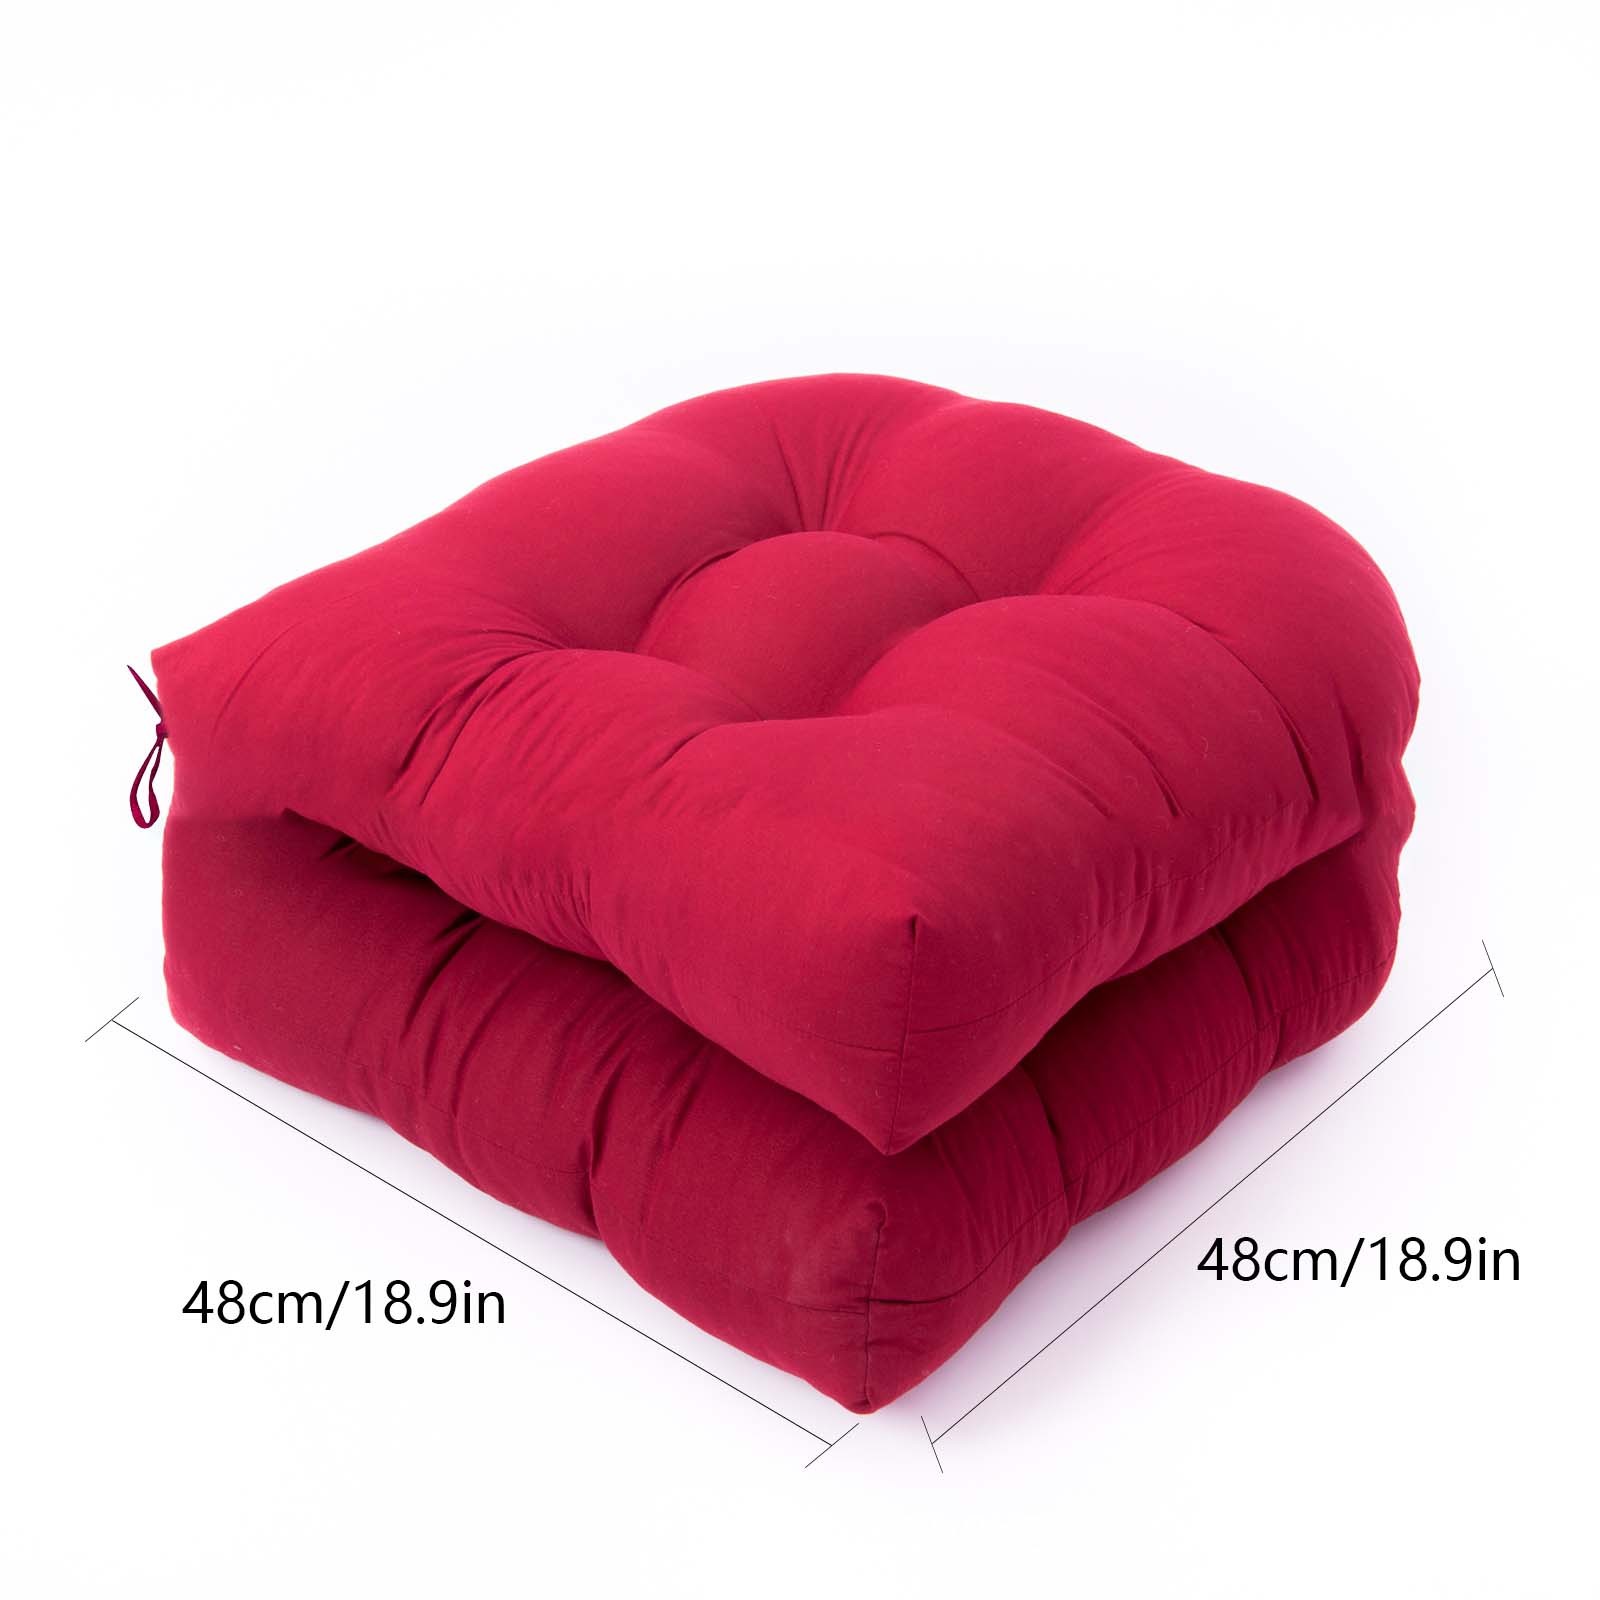 Mduoduo U-shaped Cushion Sofa Cushion Rattan Chair Red Cushion Terrace Cushion for Outdoor Indoor 2 Pcs - image 5 of 14